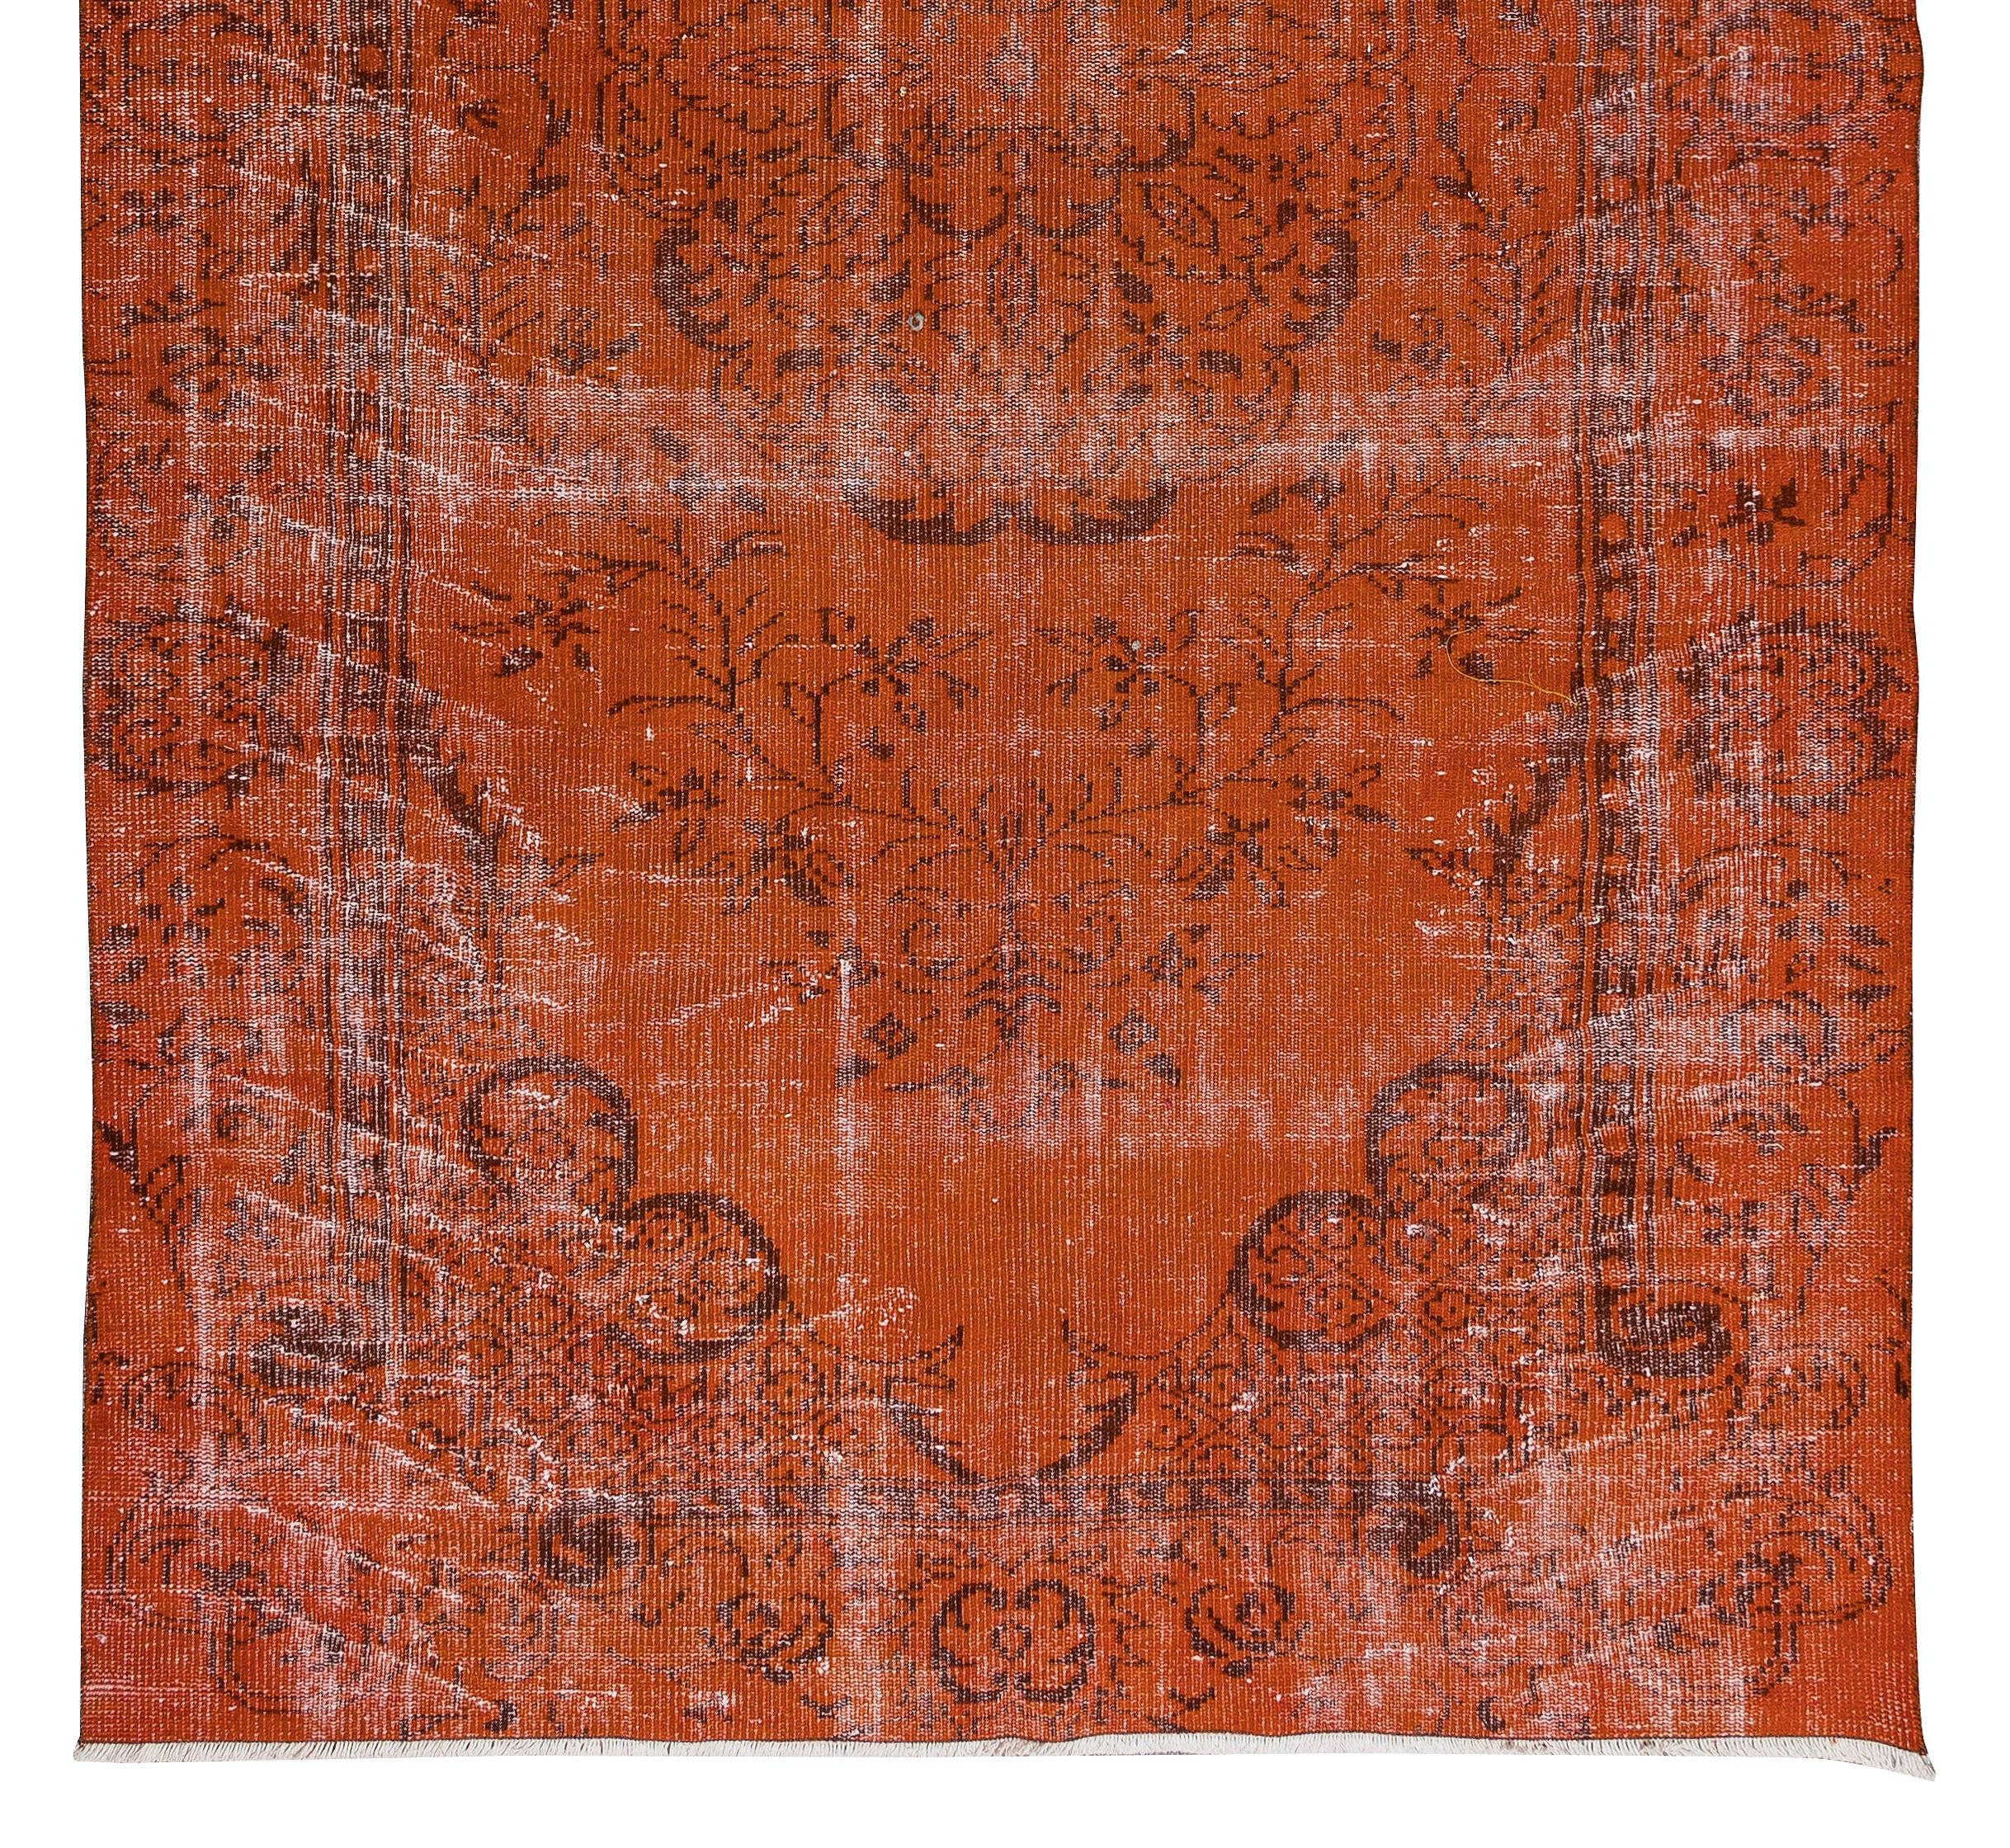 20th Century 5.4x10 Ft Room Size Orange Wool Rug, Handmade Turkish Carpet for Modern Interior For Sale